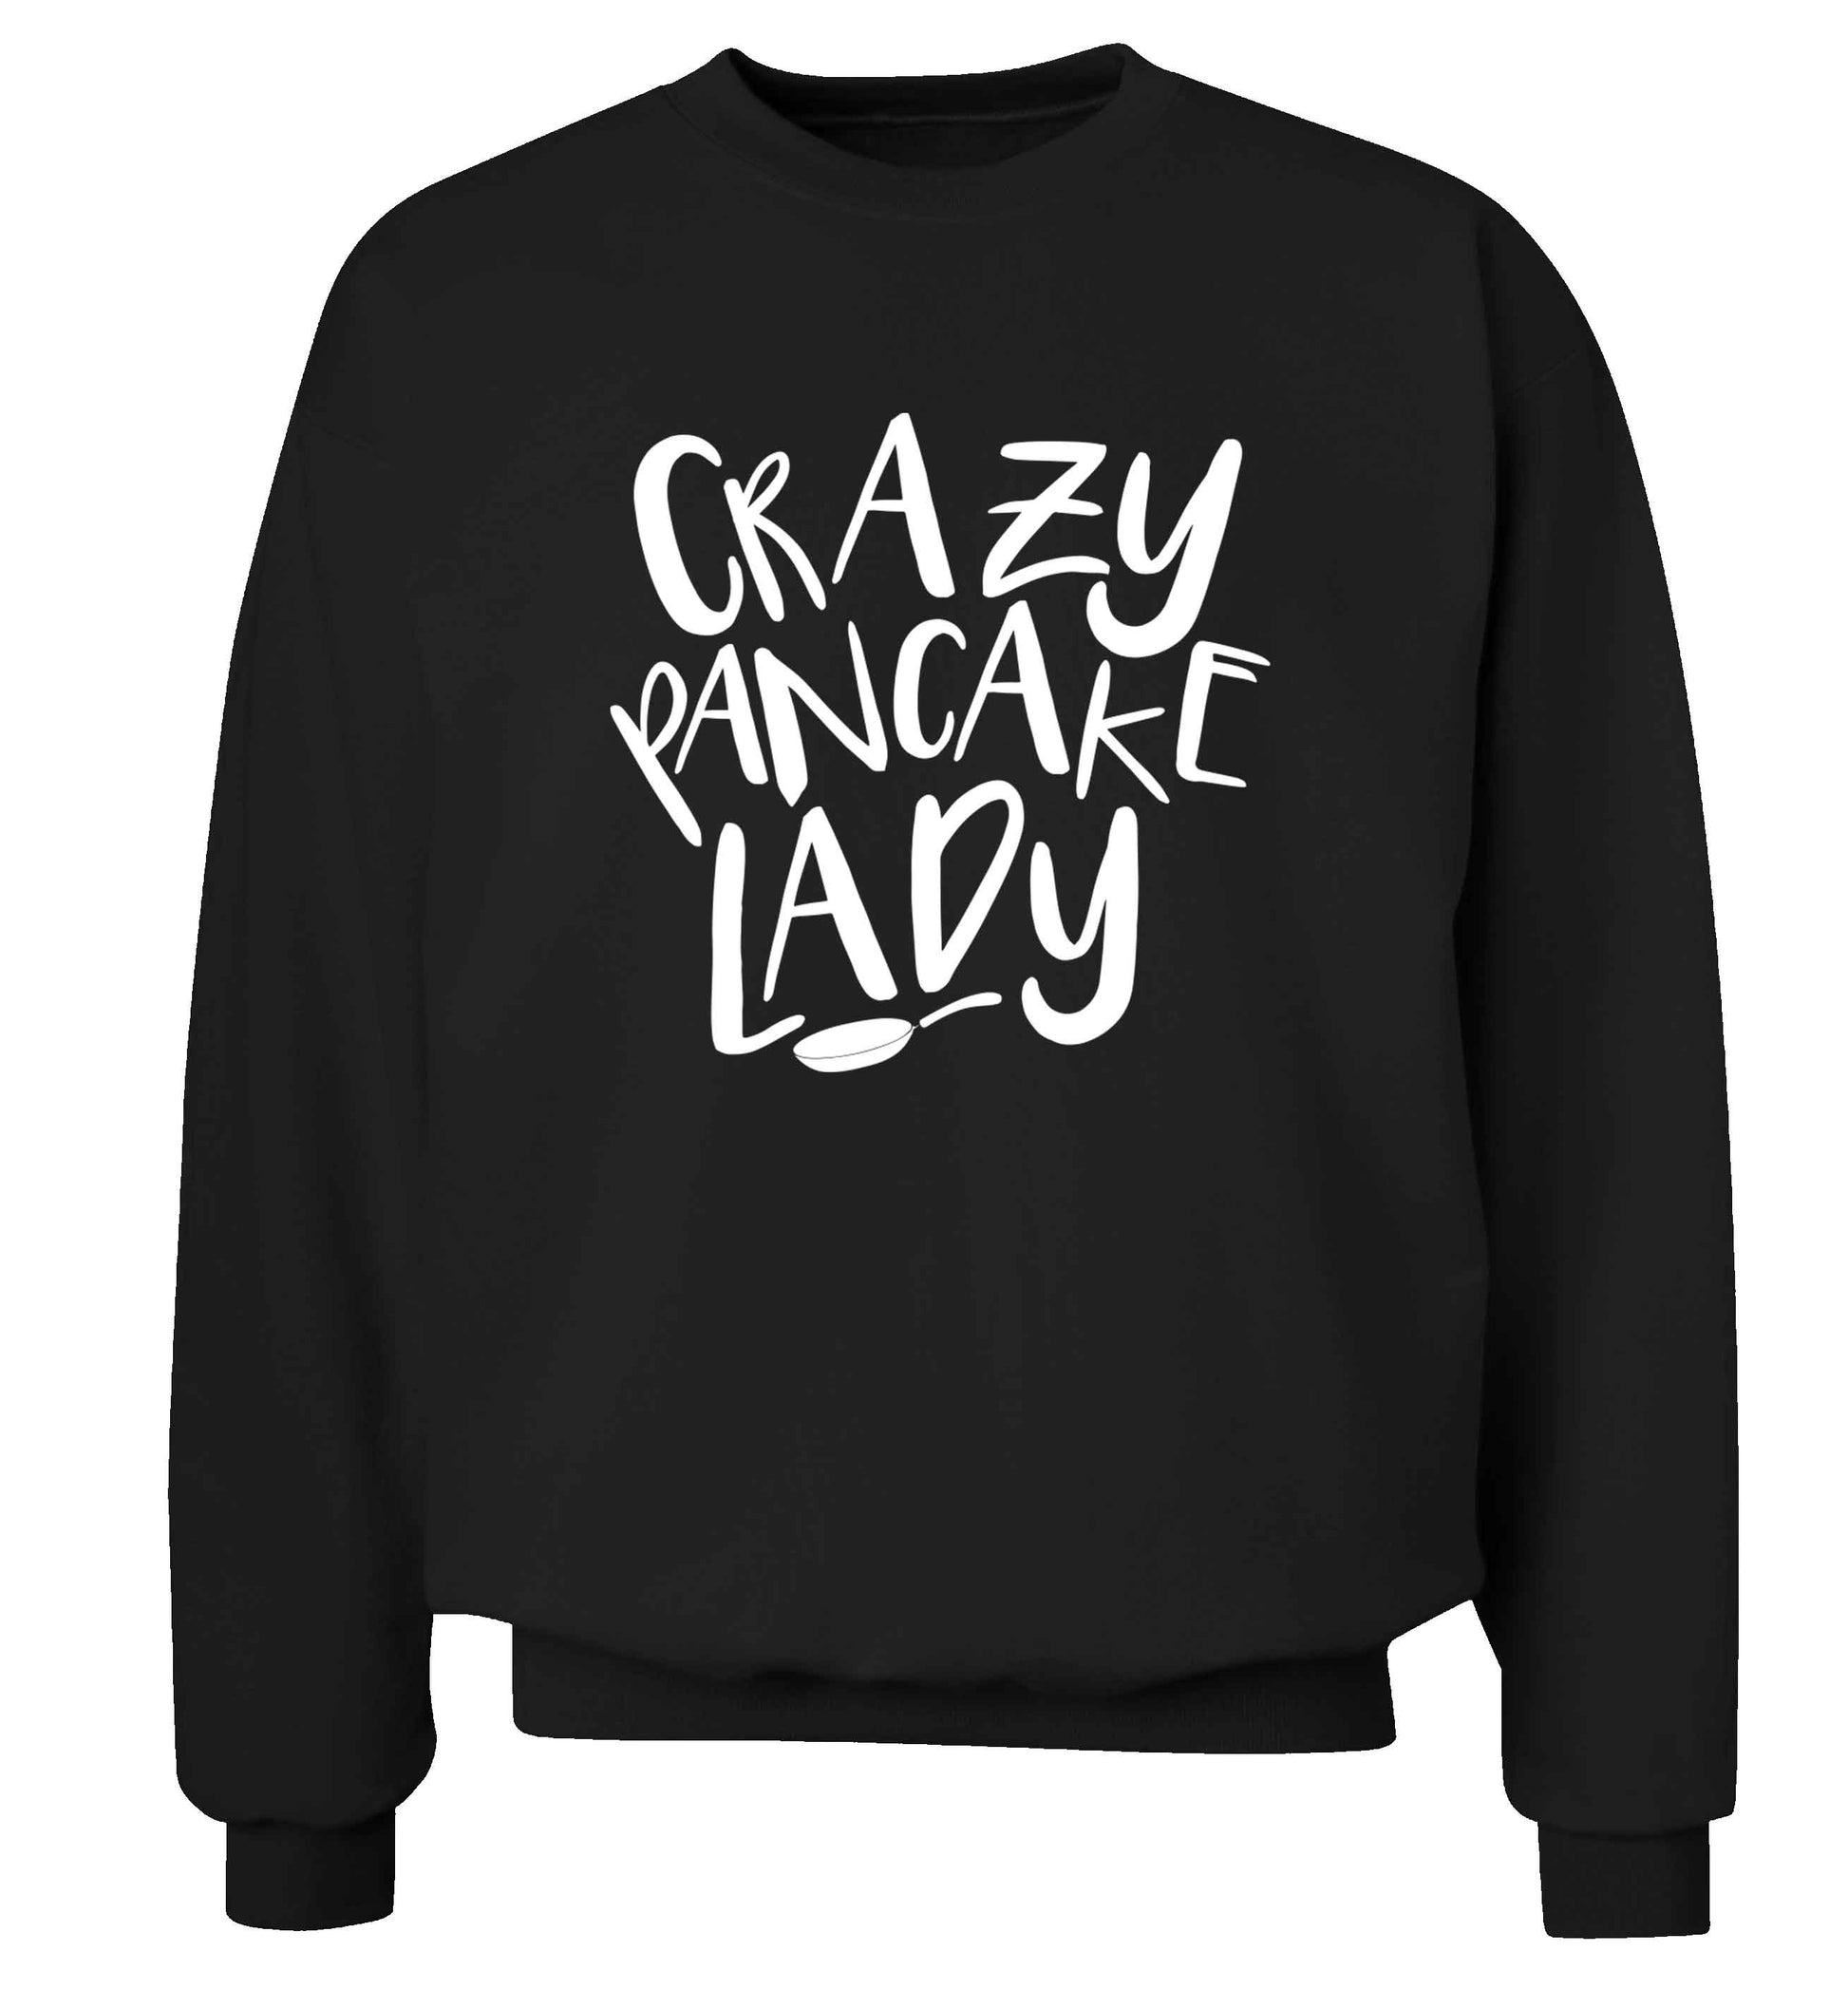 Crazy pancake lady adult's unisex black sweater 2XL